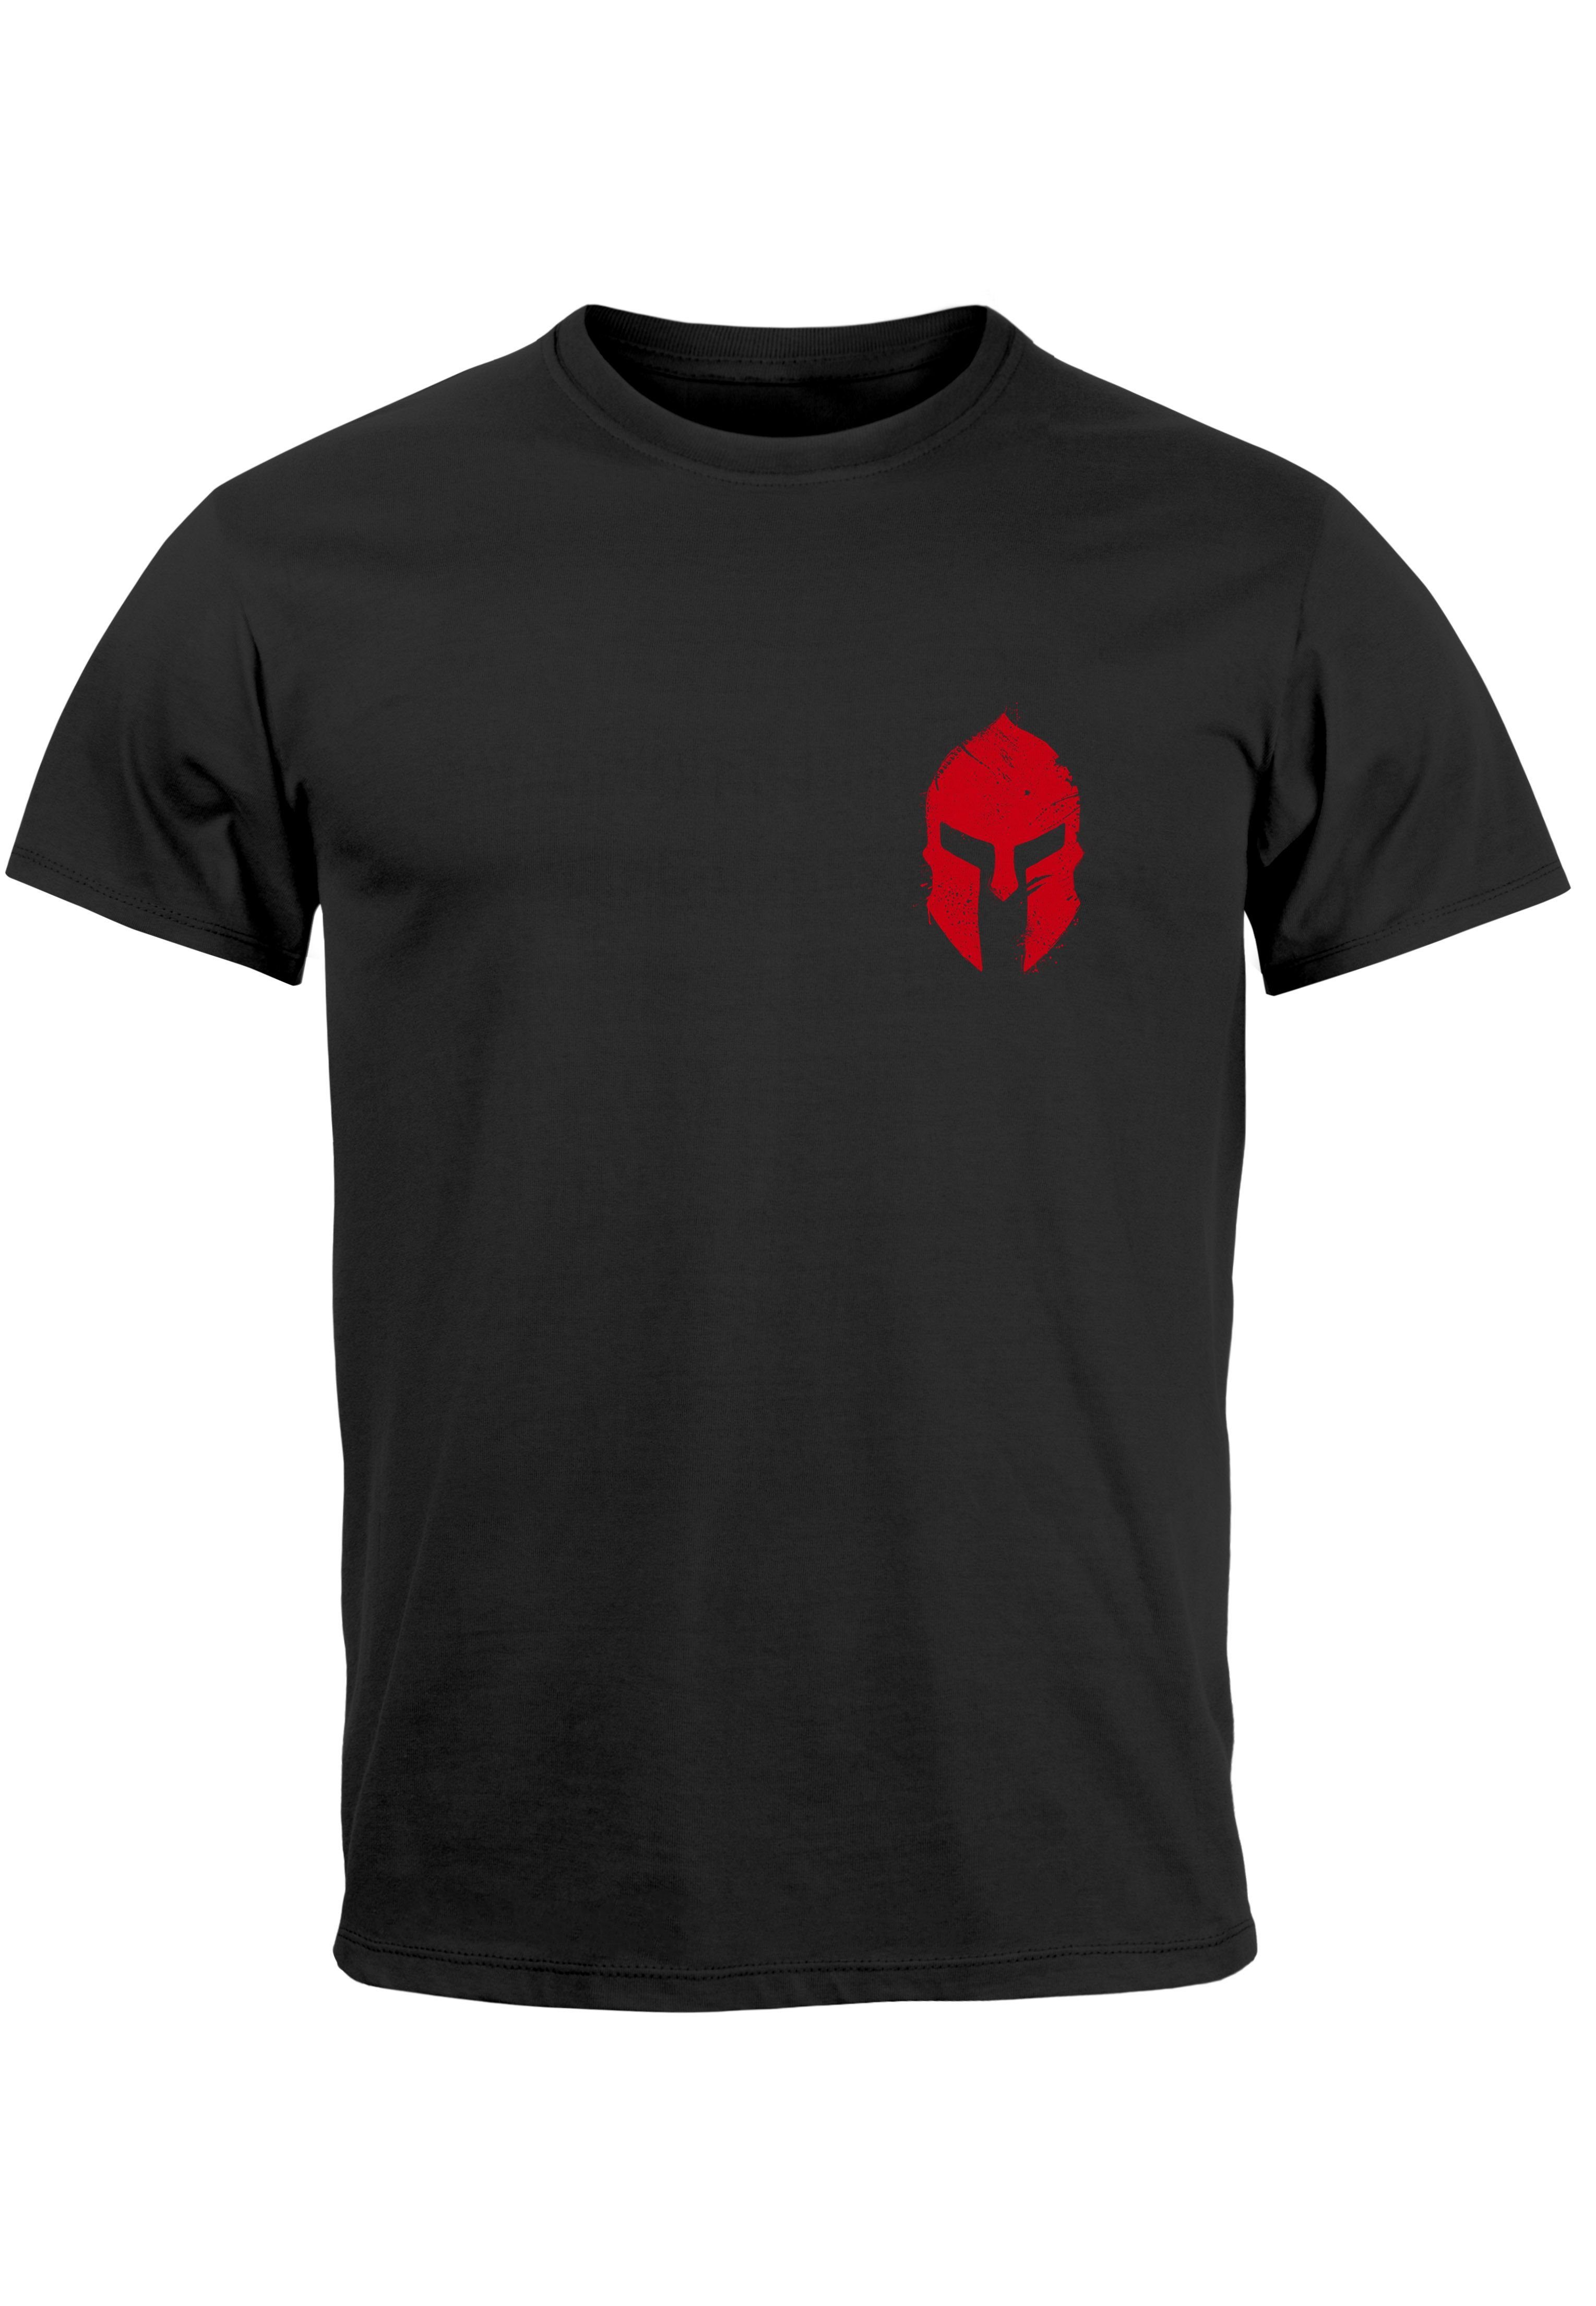 Sparta-Helm Warr Neverless Print mit Print Gladiator Print-Shirt Krieger Herren Spartaner schwarz-rot T-Shirt Logo